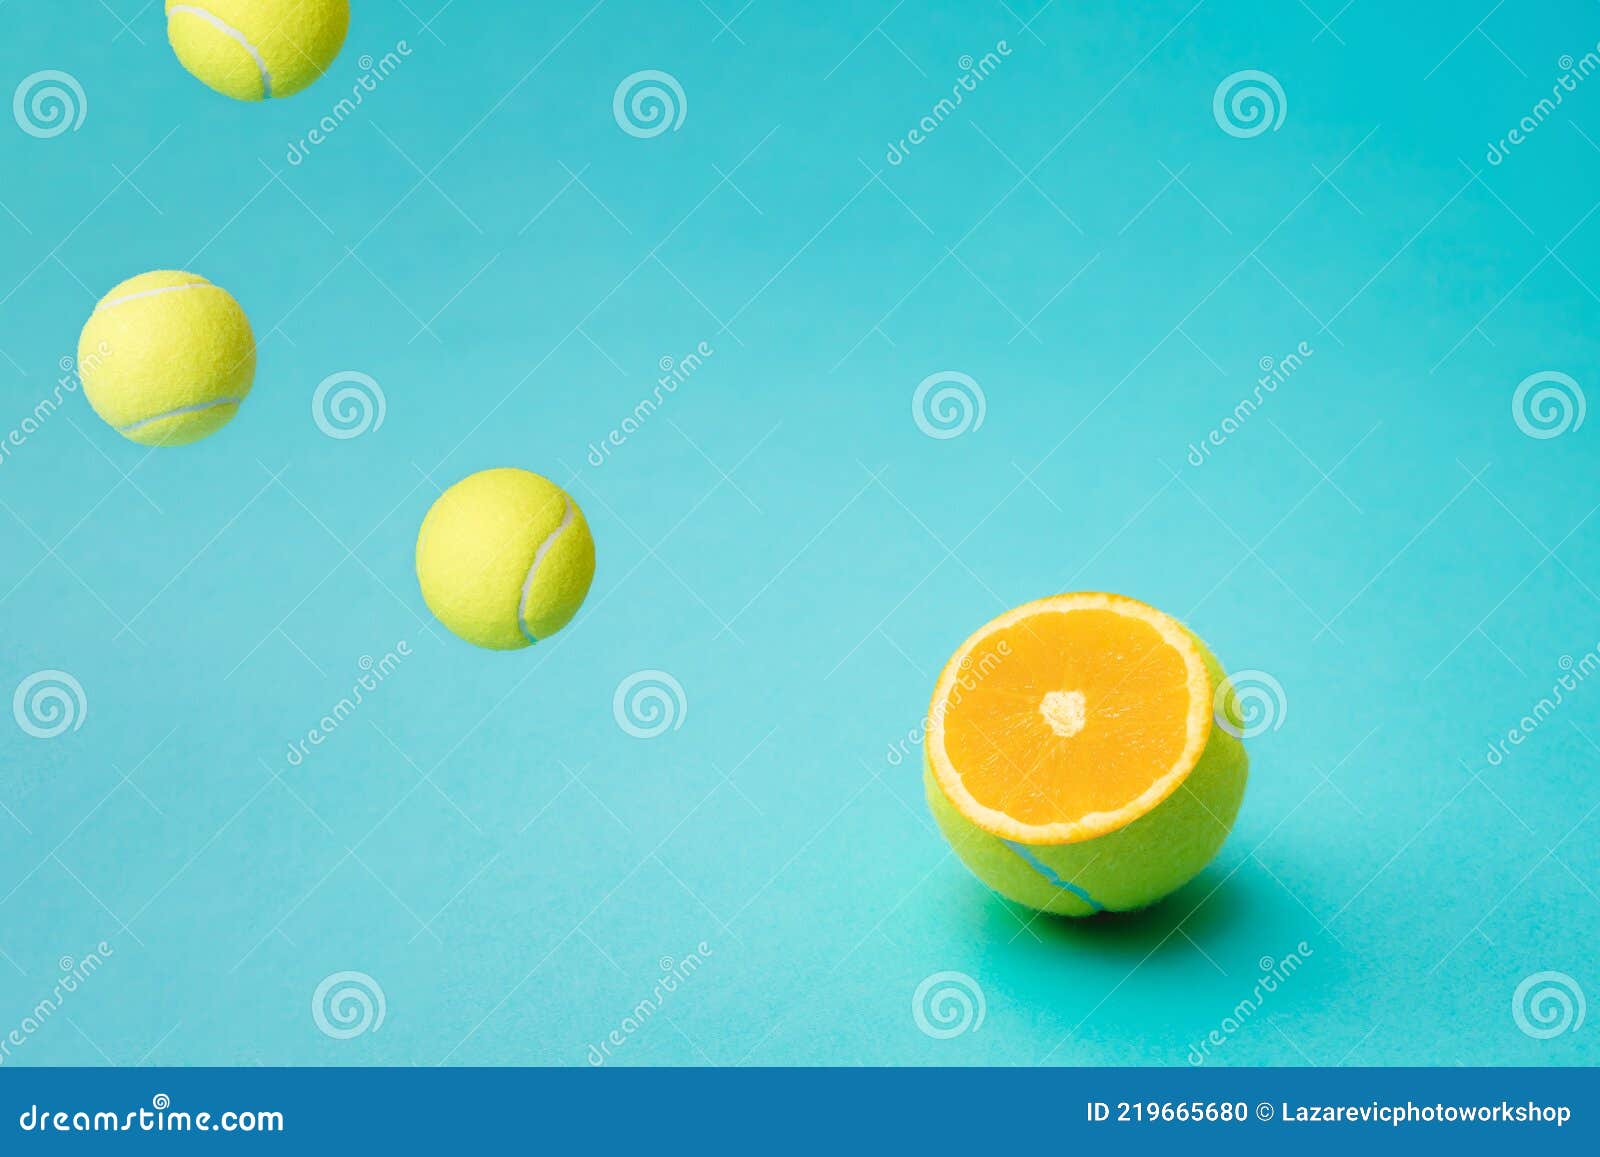 Modieus Machtigen Waarschijnlijk Cut in Half a Green Tennis Ball. an Orange in a Tennis Ball and Balls  Falling Next To it Stock Photo - Image of jungle, fitness: 219665680